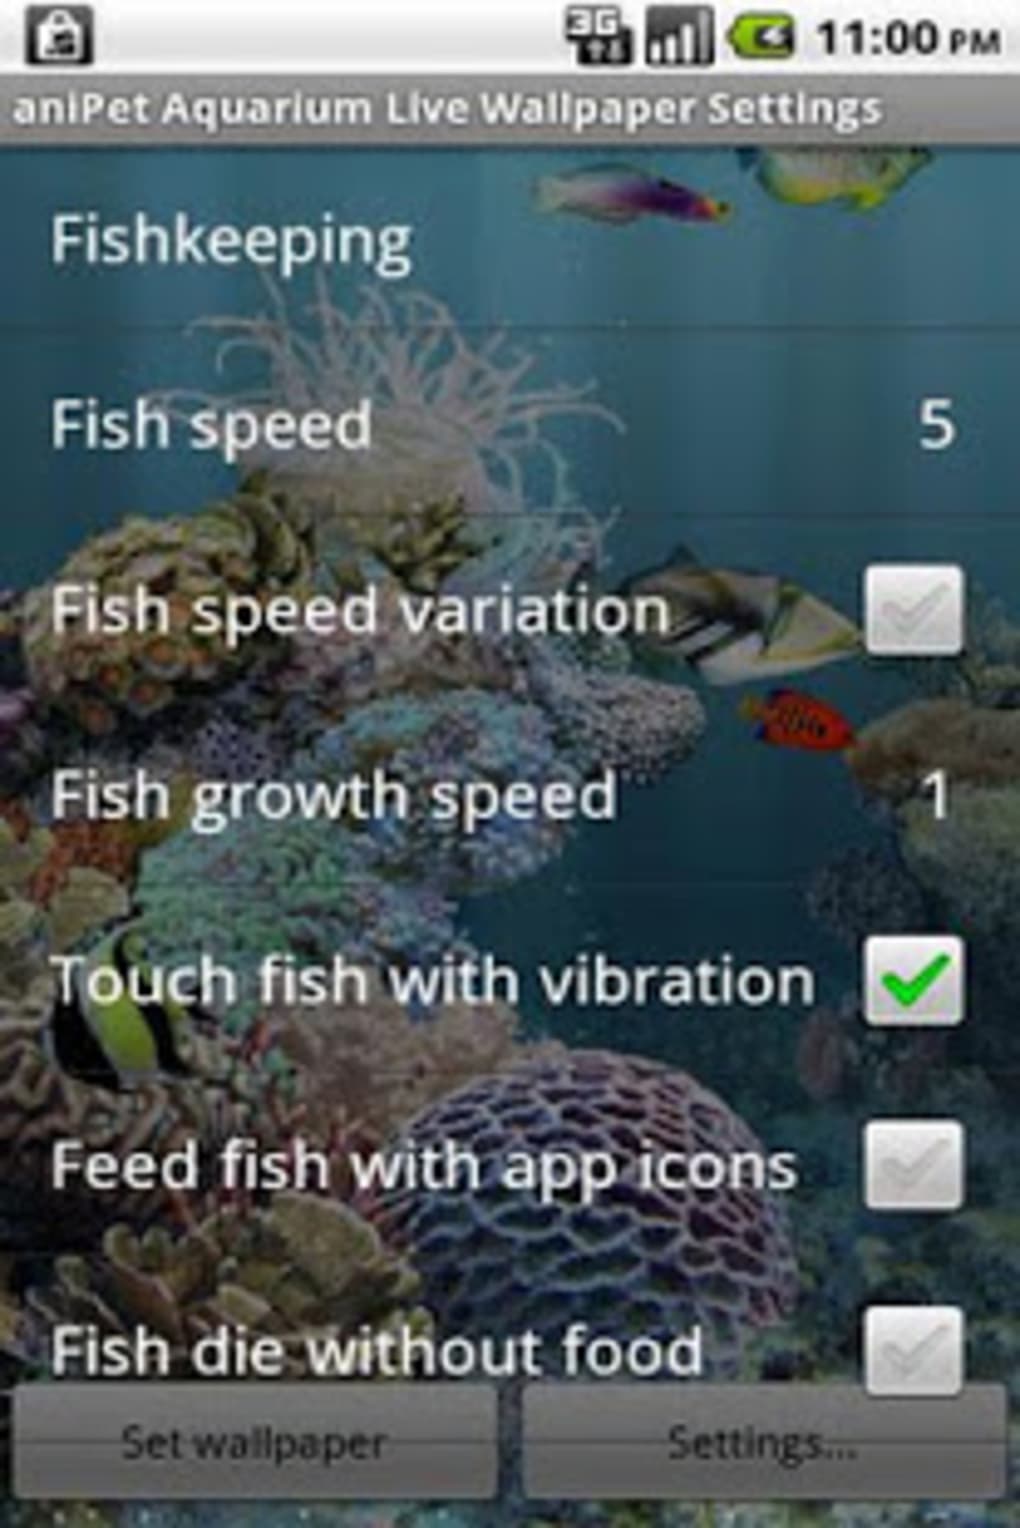 Anipet Aquarium Live Wallpaper - Android Application Package - HD Wallpaper 